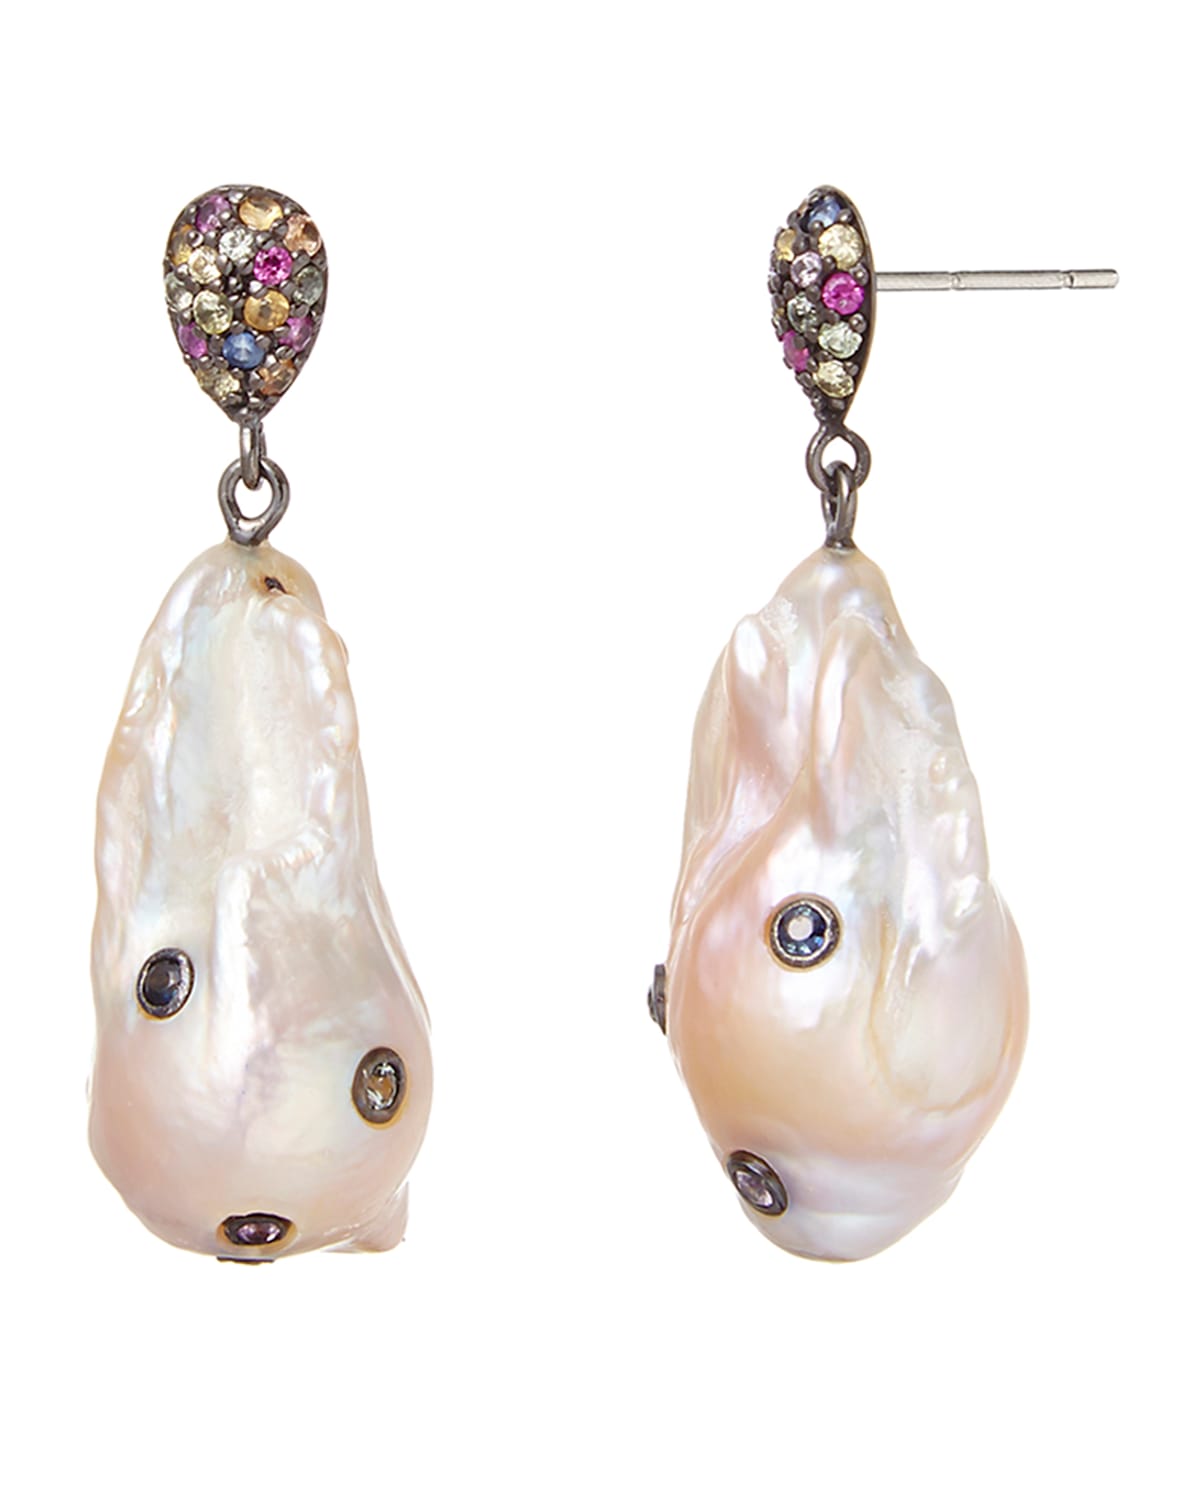 M.C.L. by Matthew Campbell Laurenza Sapphire & Baroque Pearl Drop Earrings